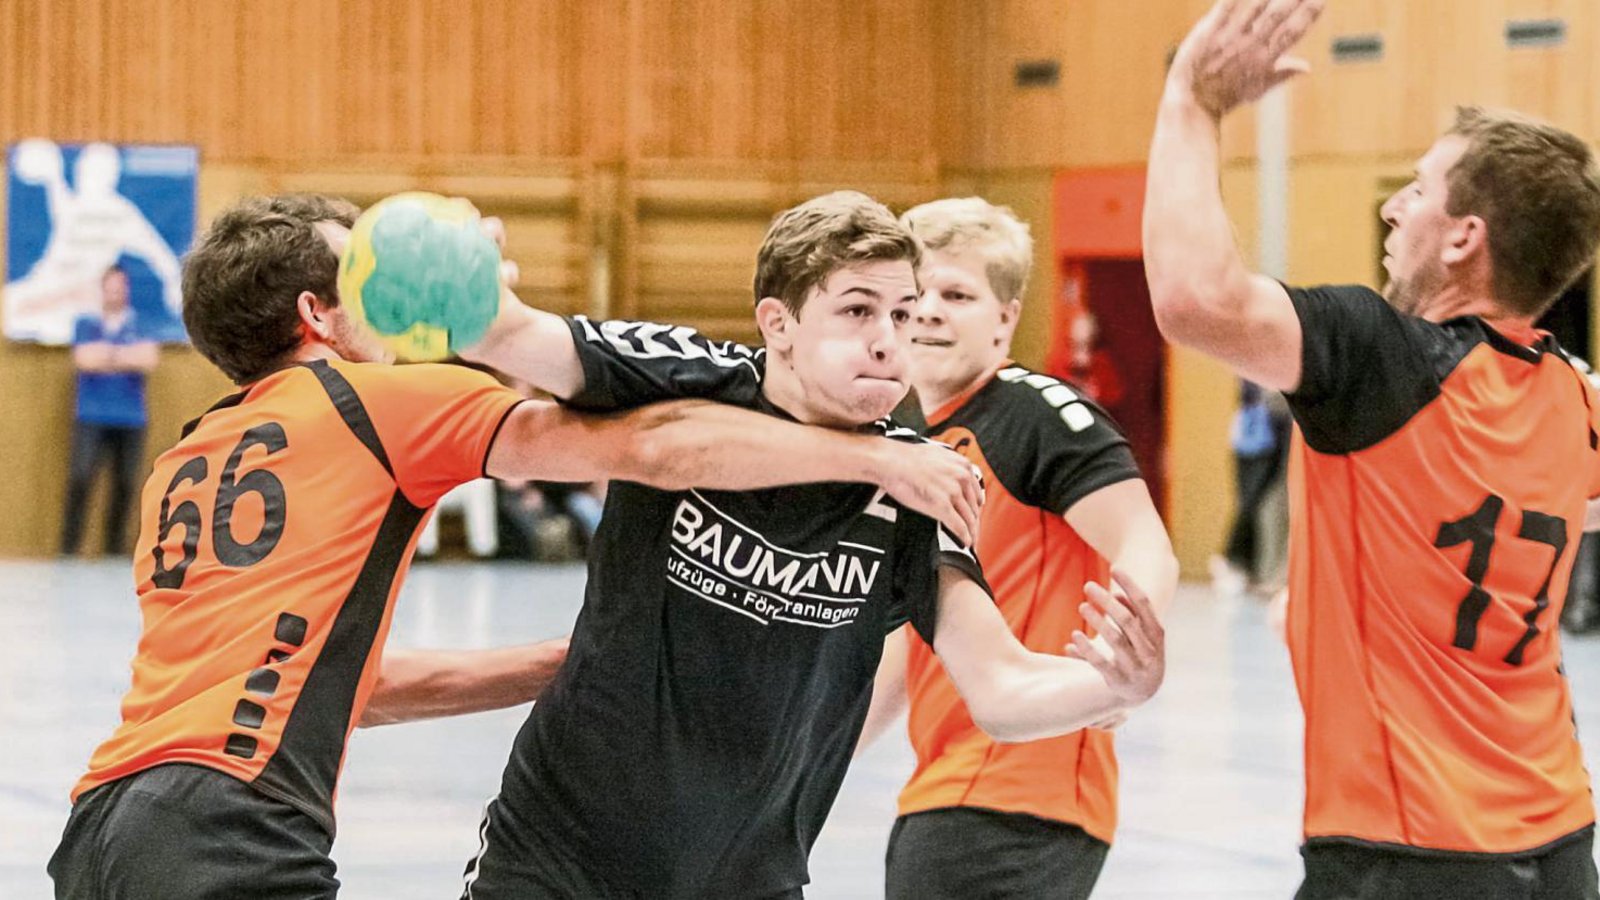 Packender Handball in Enzweihingen: Sascha Rühling (CVJM Enzweihingen) wird beim Wurfversuch von Julian Gauger (SG Mössingen/Belsen) geklammert. Foto: Simecek